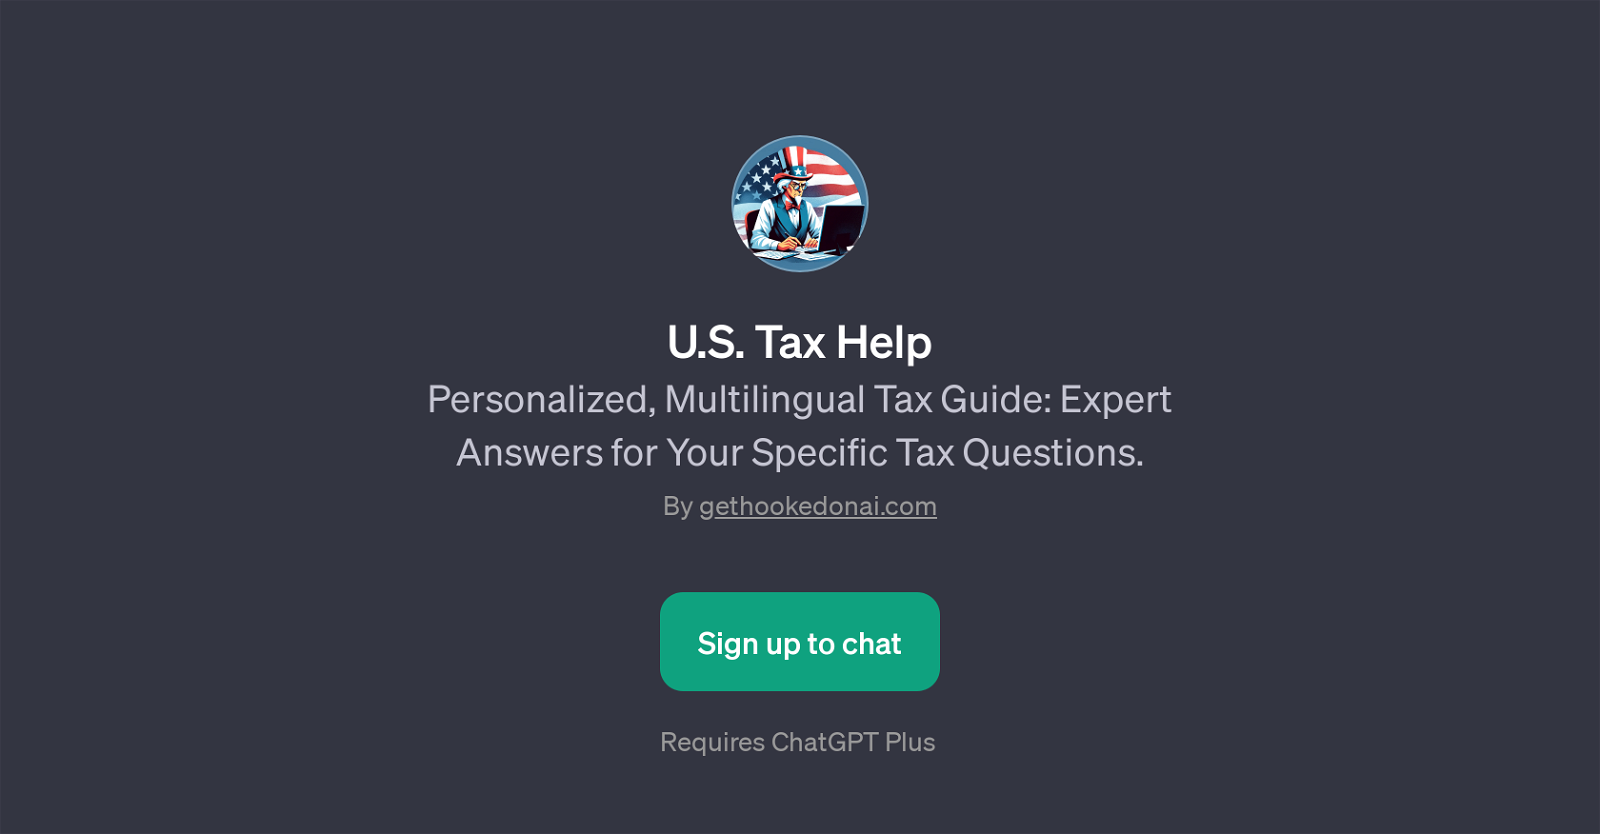 U.S. Tax Help website